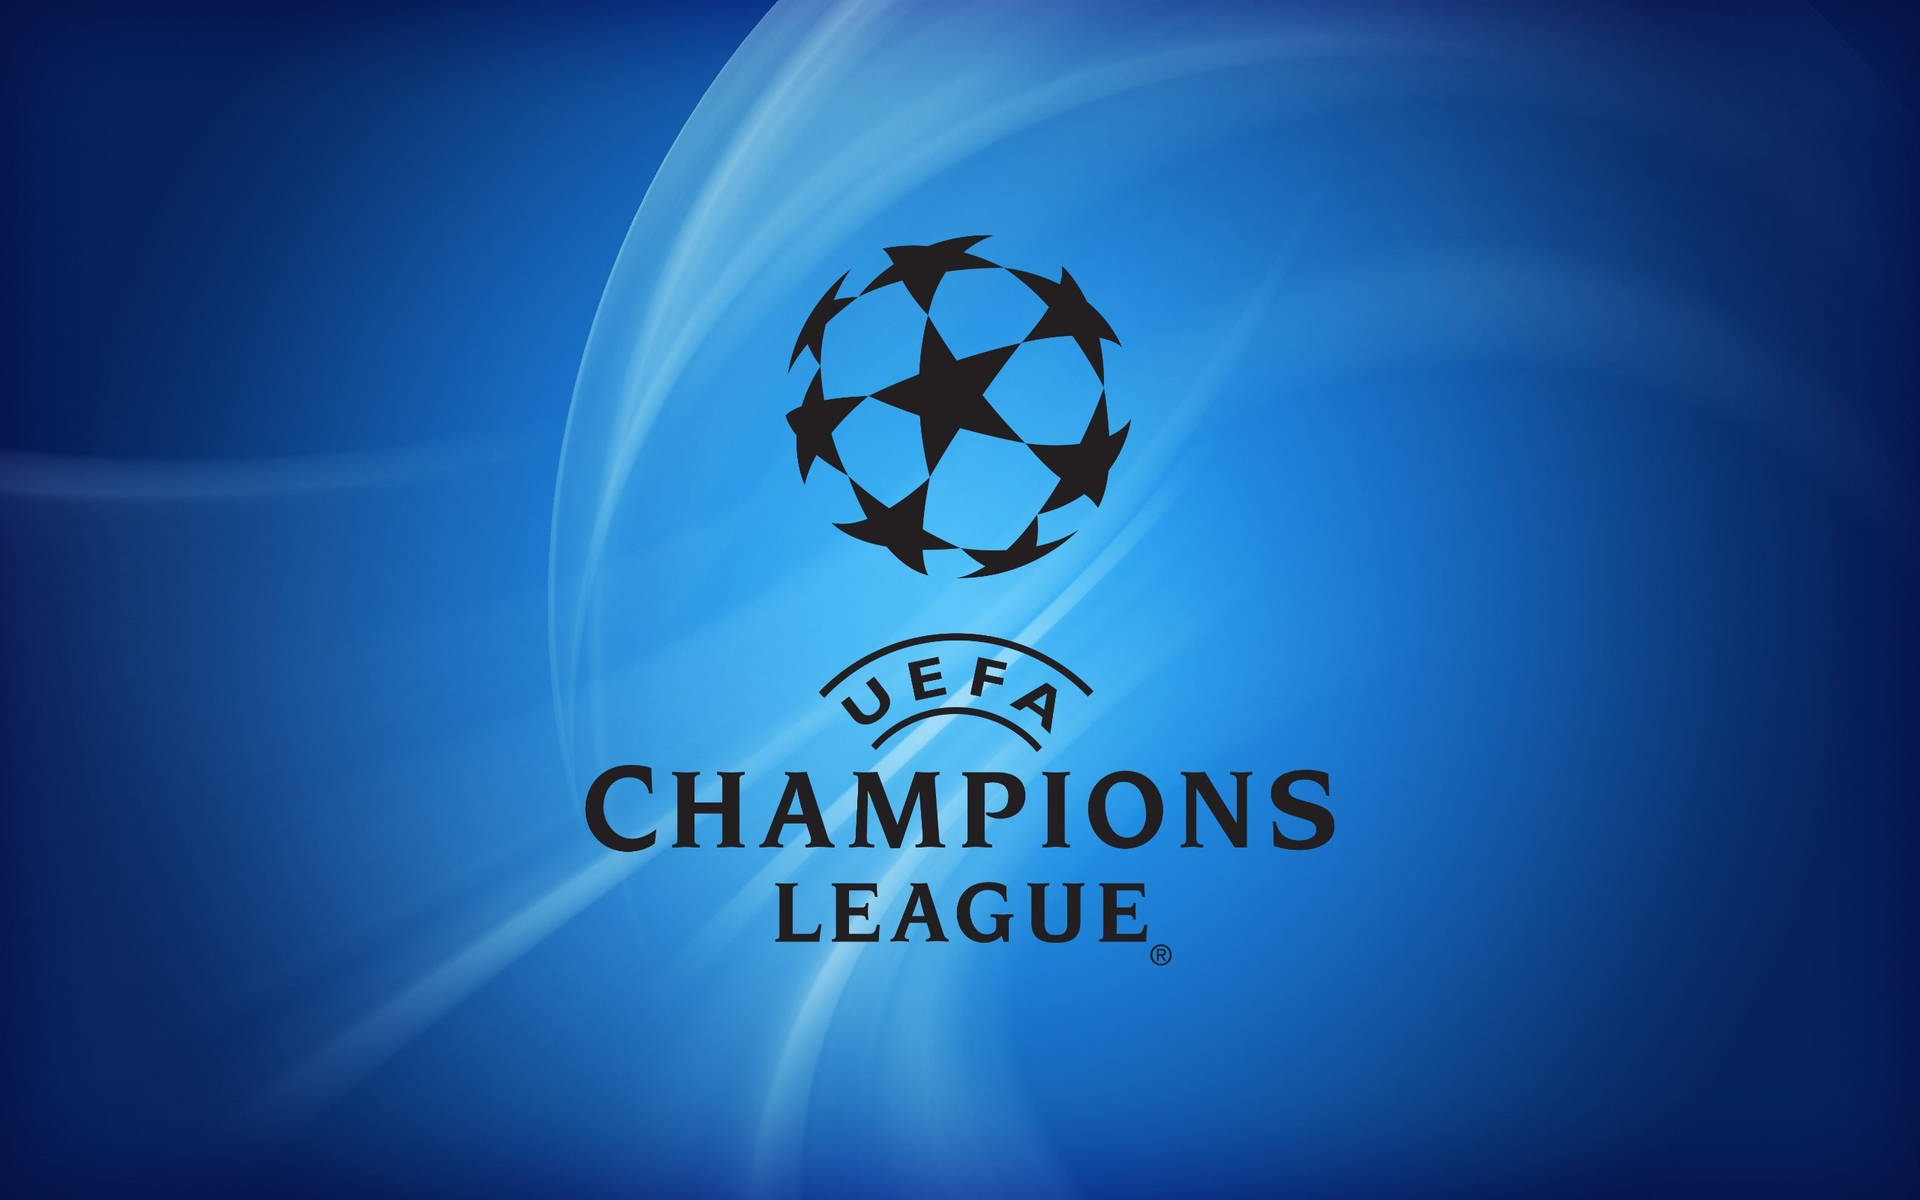 Uefa Champions League Blue Football